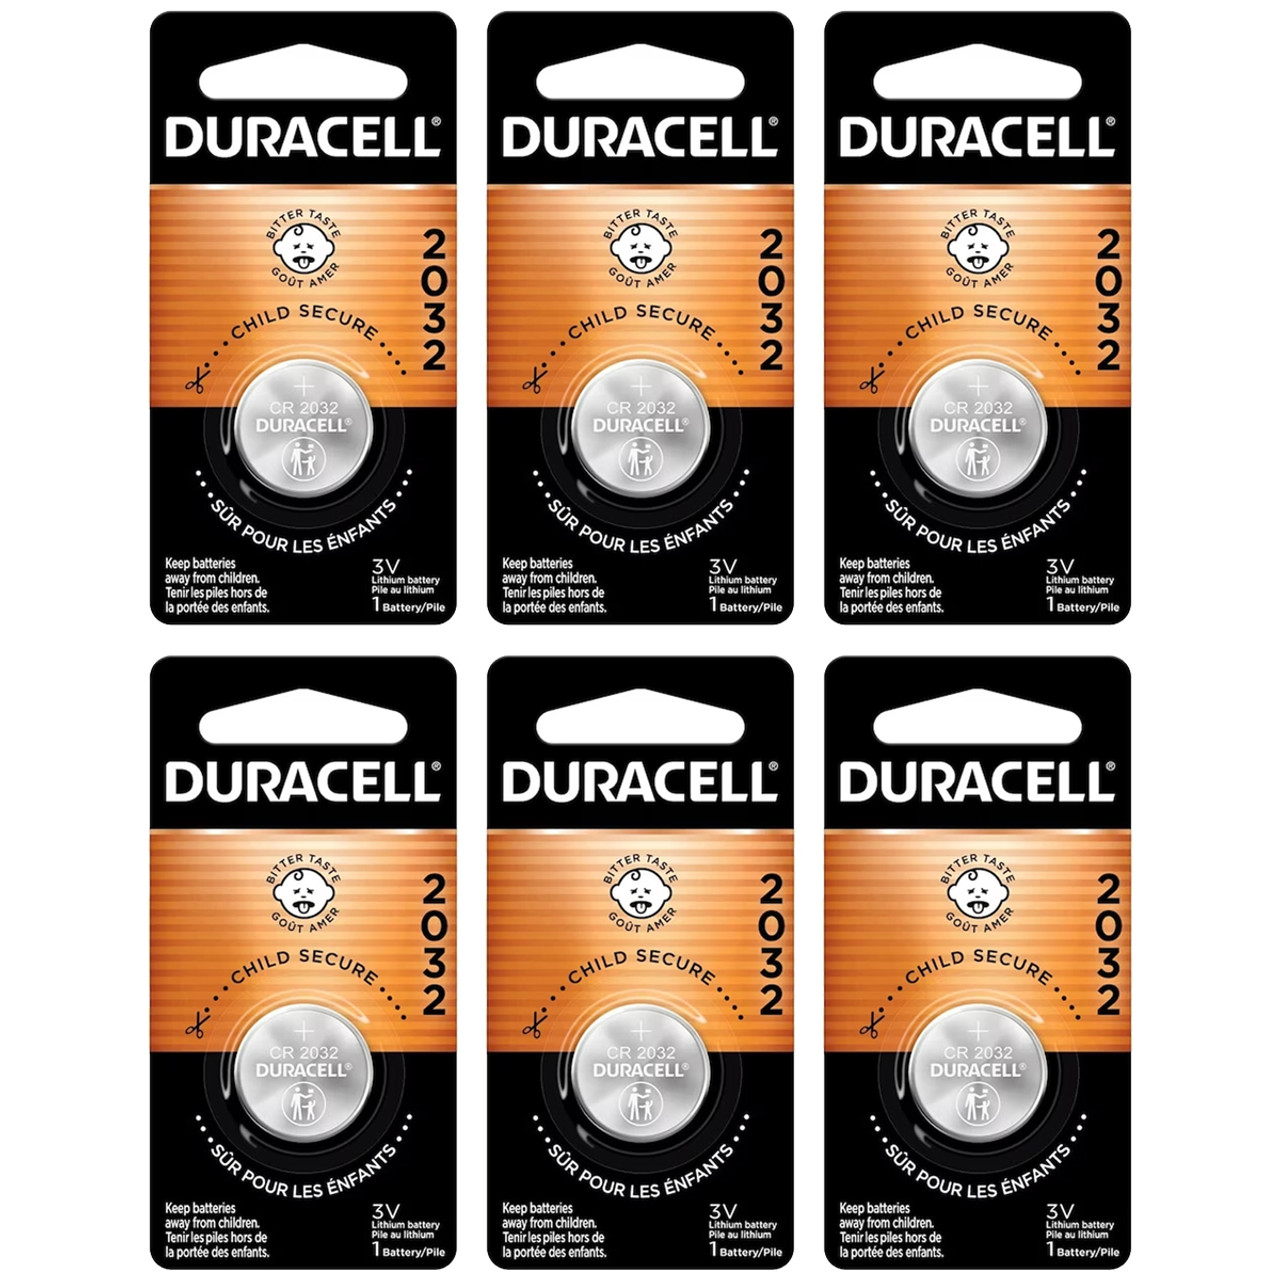 4 x Duracell CR2032 Batteries 3V Lithium Coin Cells DL2032